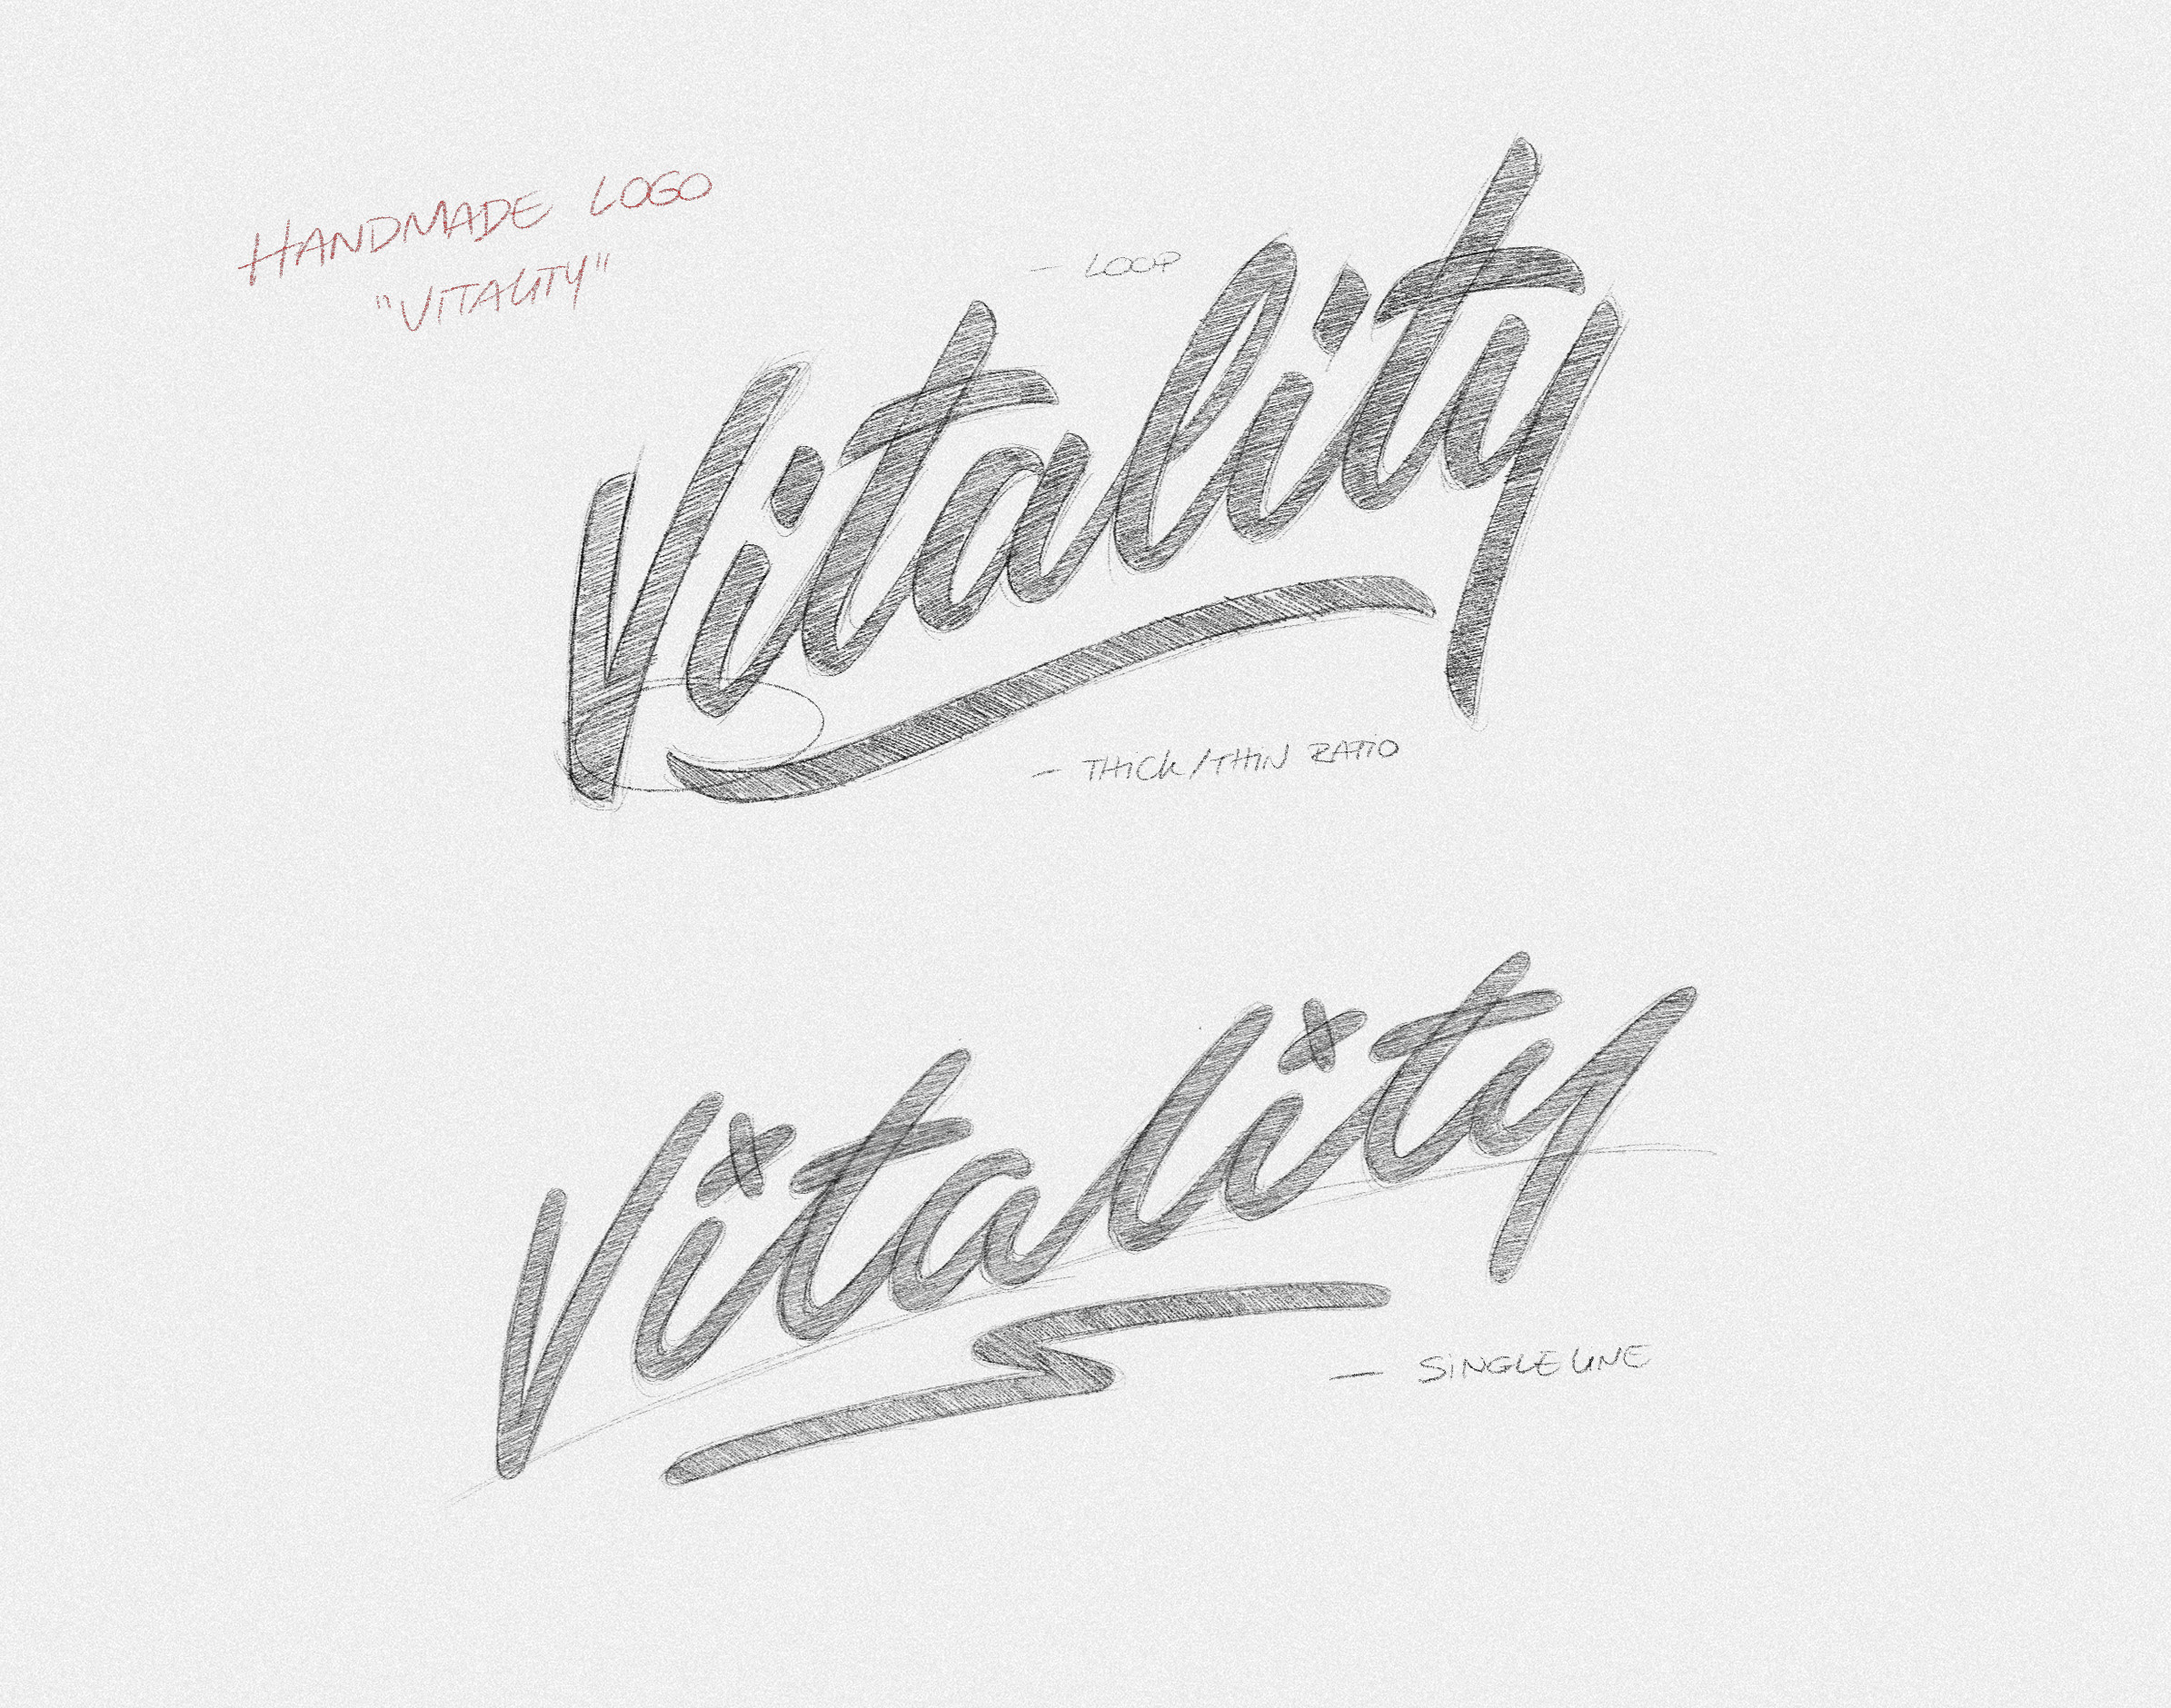 Team vitality sports logo stock illustration. Illustration of